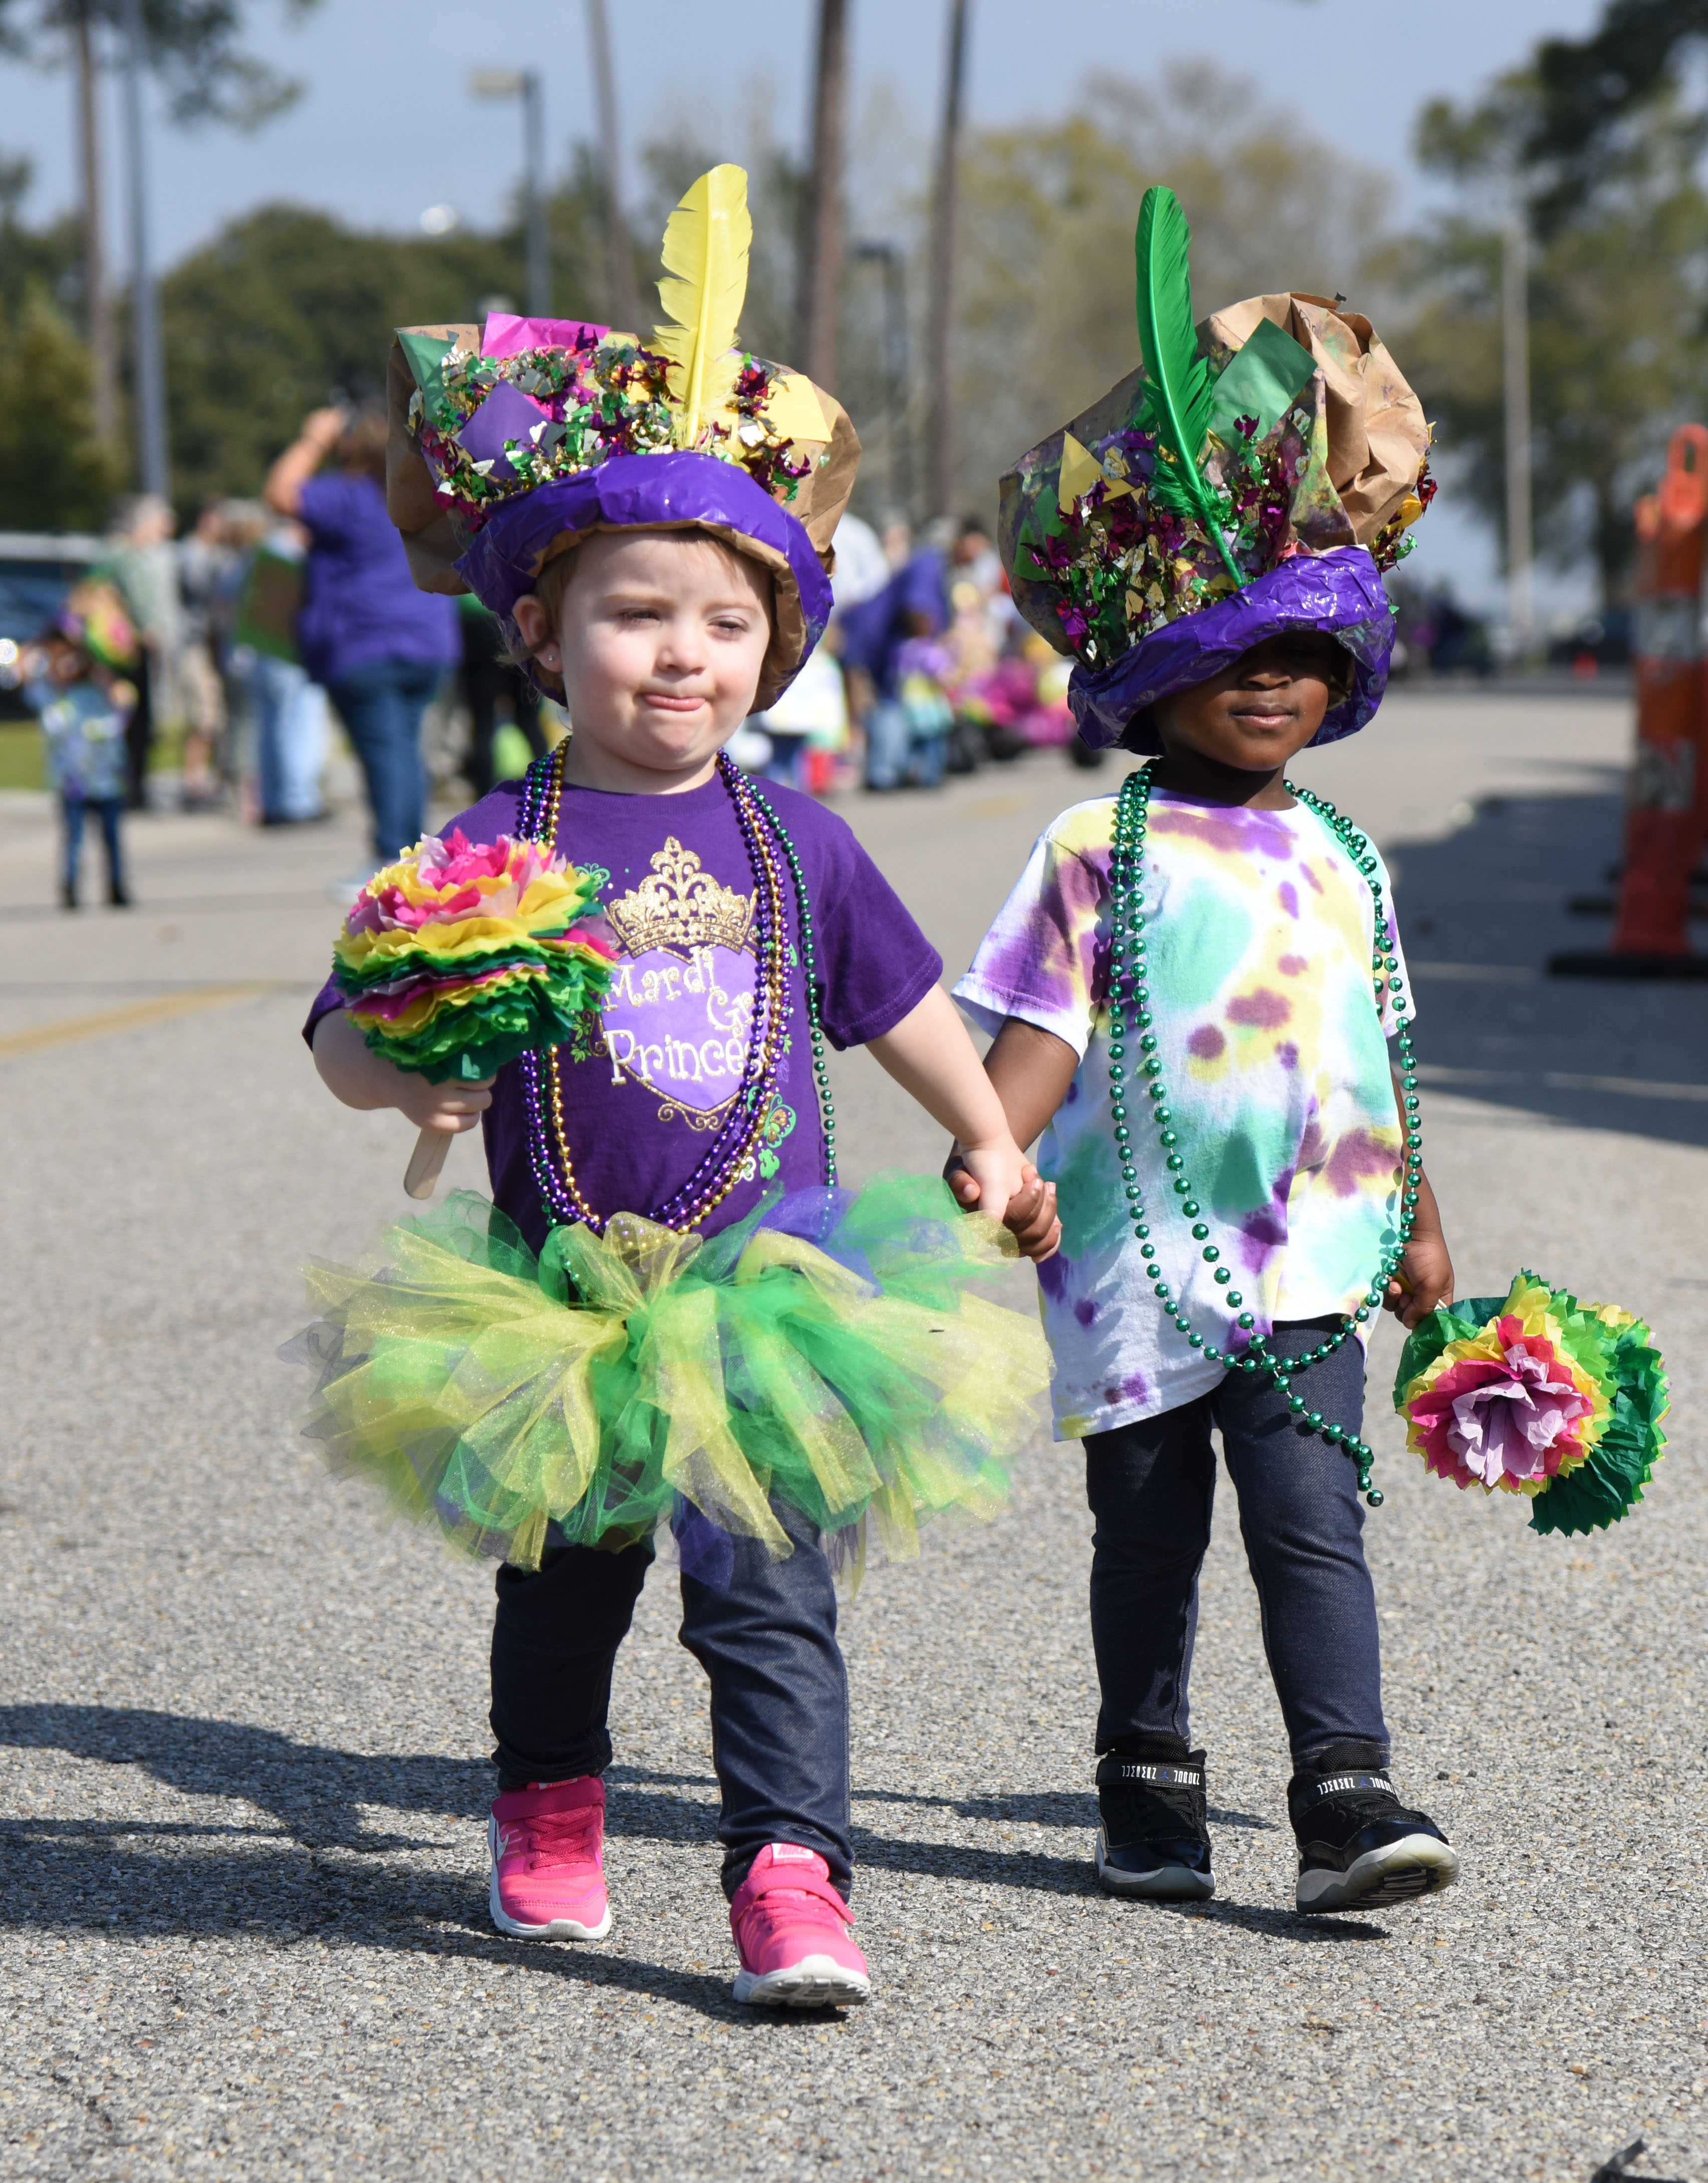 Child development center celebrates Mardi Gras with parade